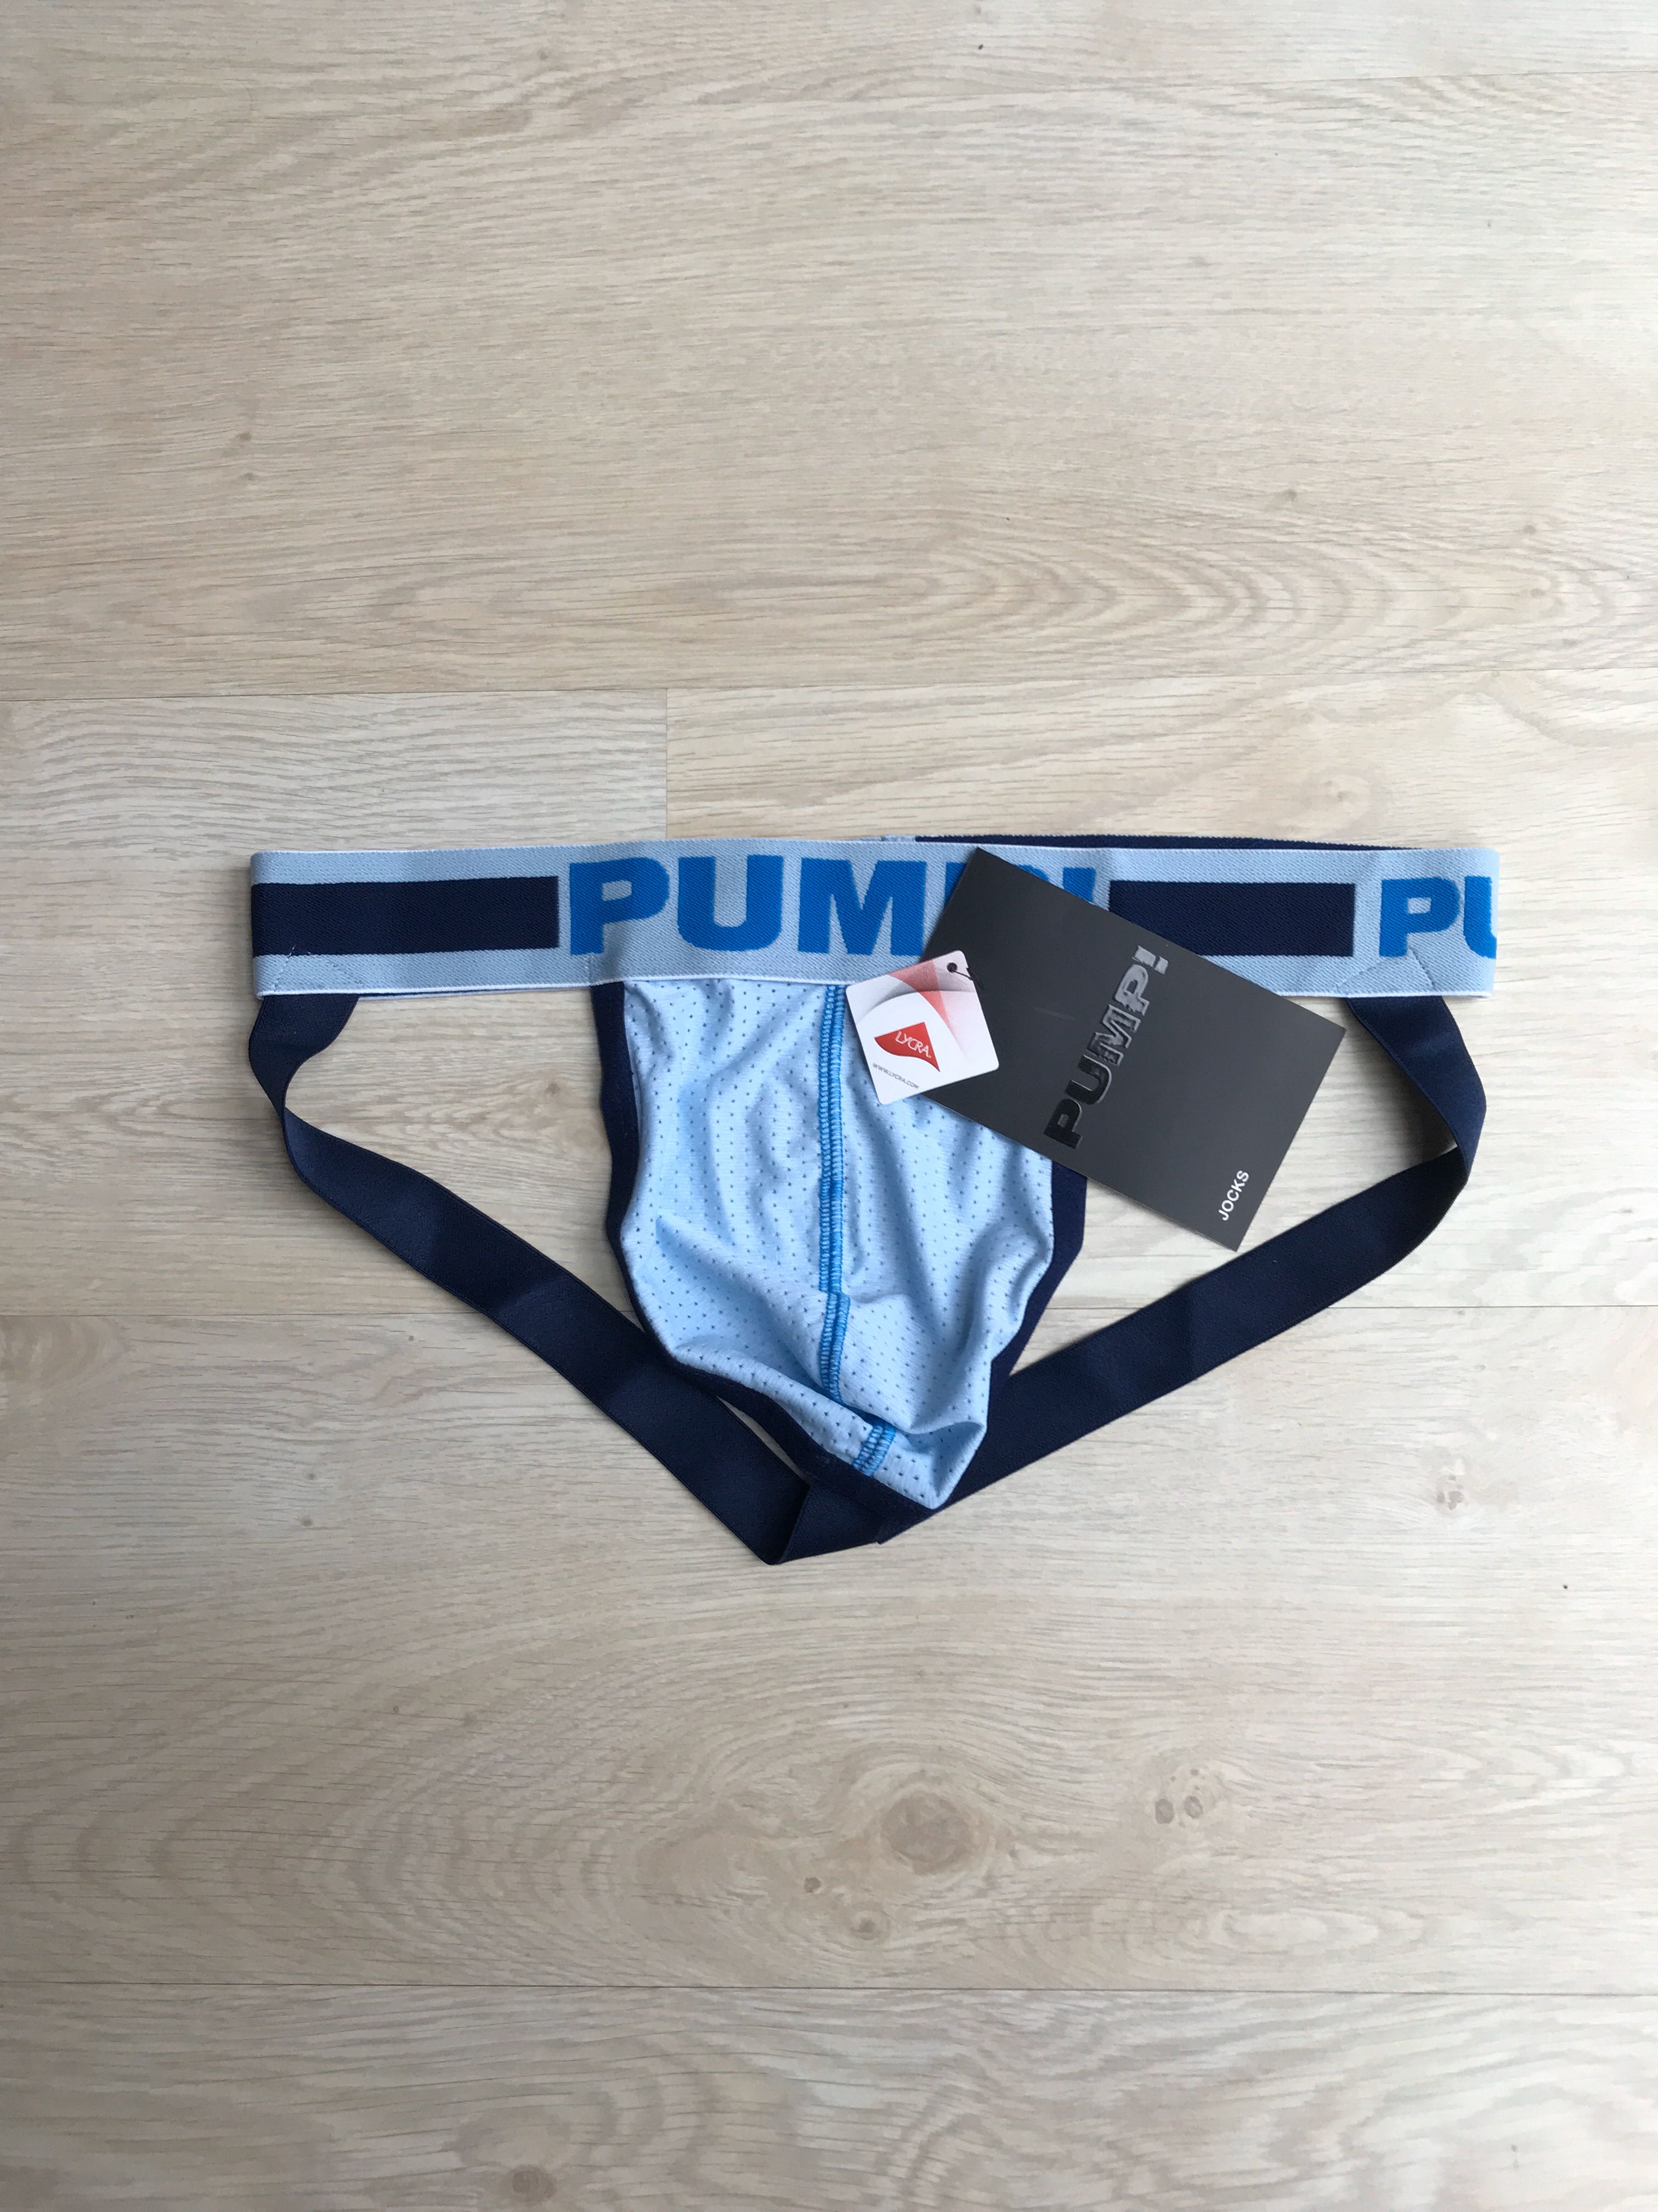 Pump Men's Jockstrap, Men's Fashion, Bottoms, New Underwear on